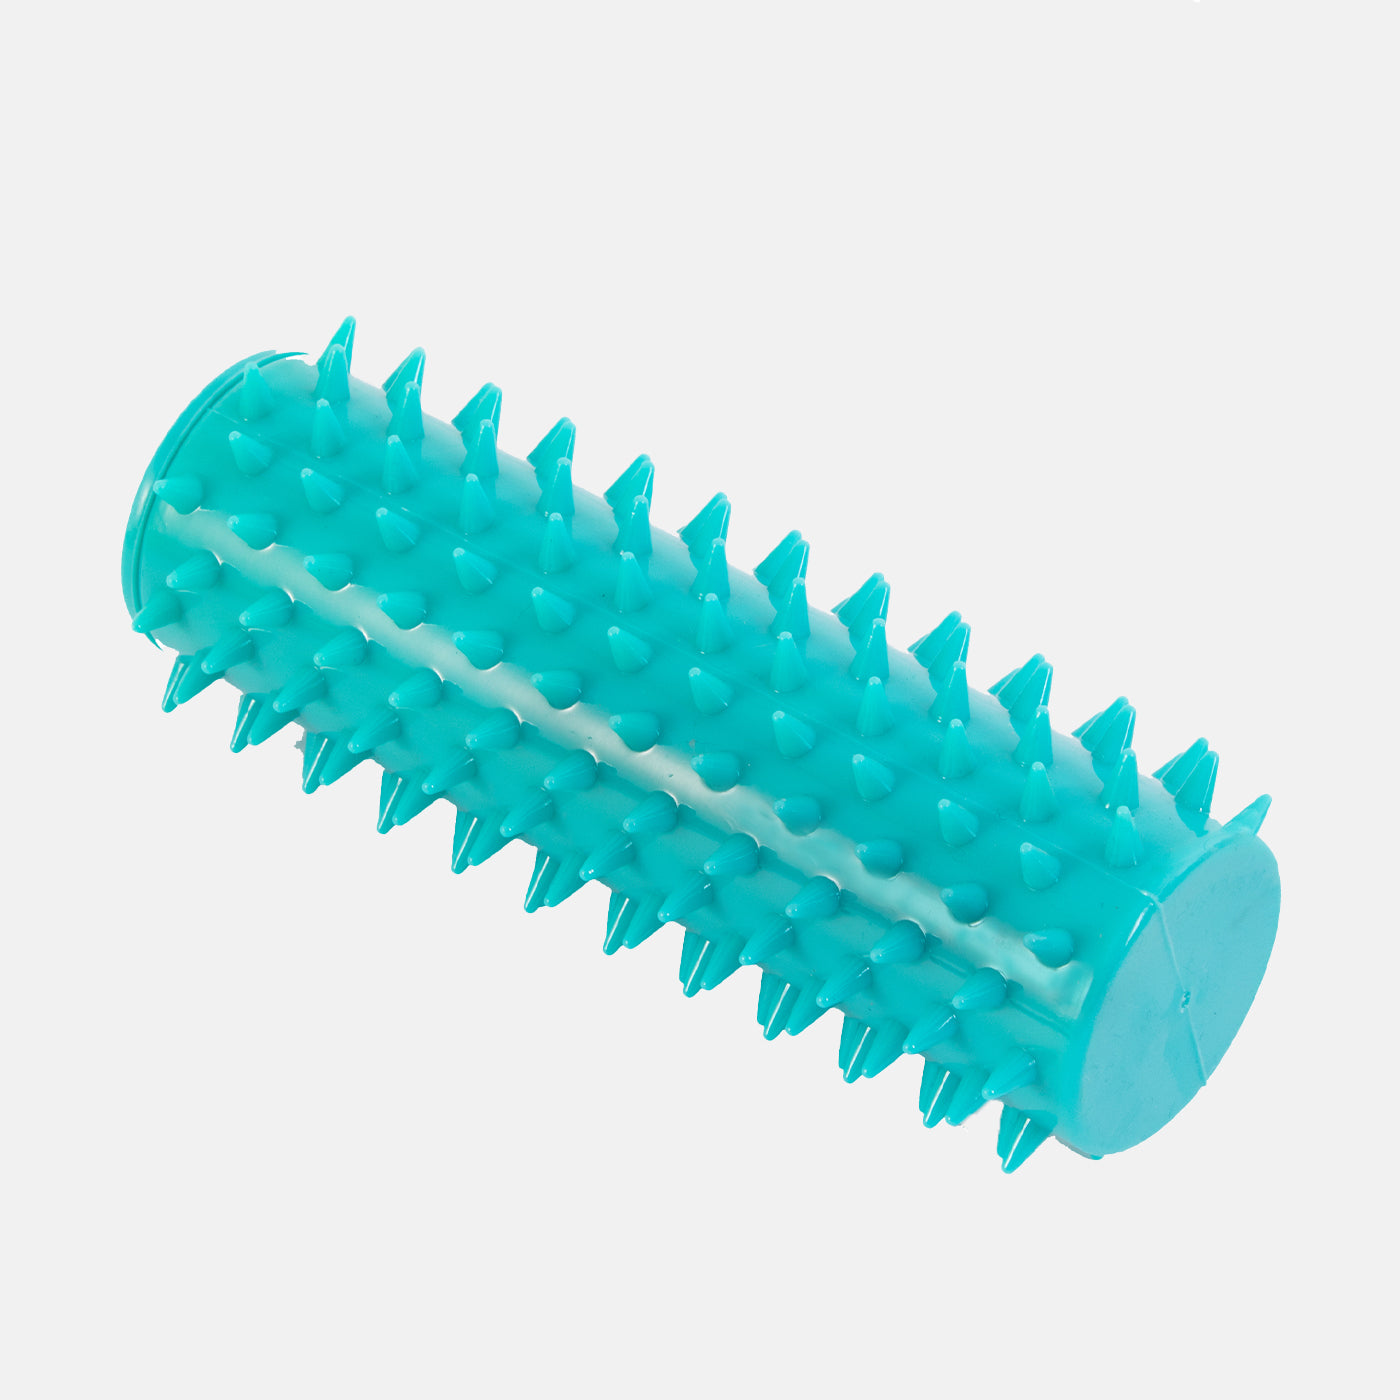 Spiky Rubber Baton Dog Toy